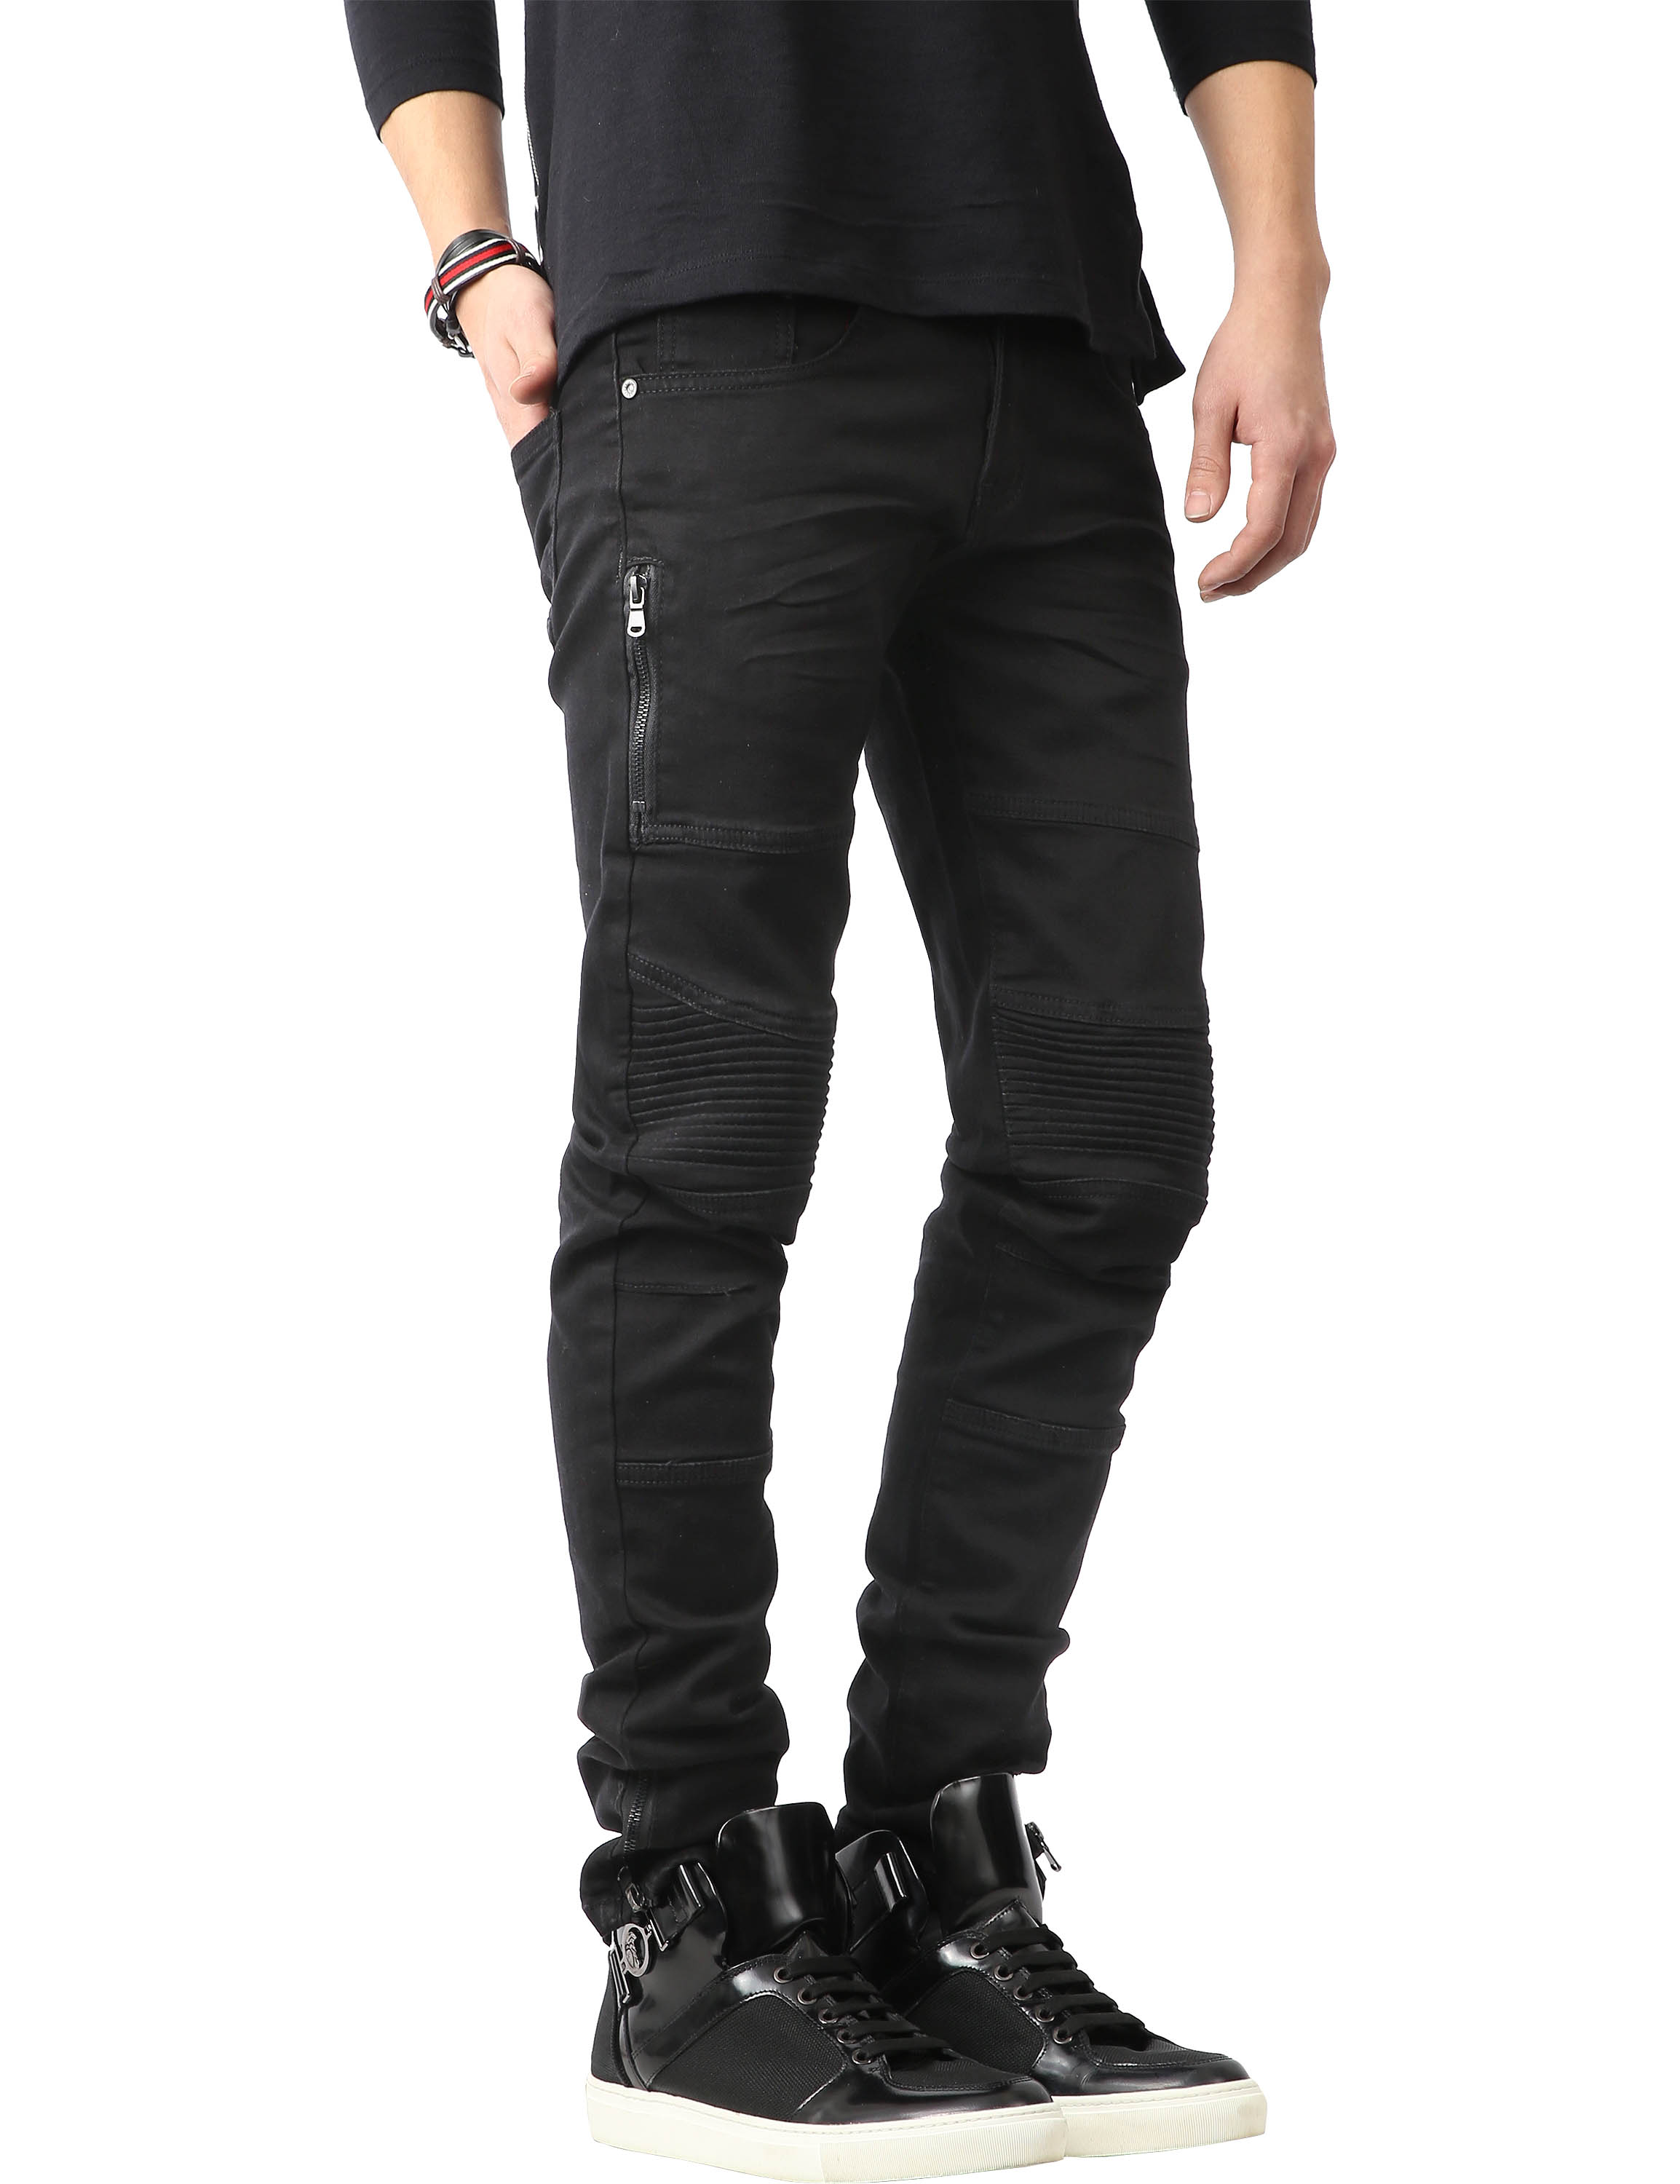 Ma Croix Mens Biker Jeans Slim Fit Distressed Ripped Zipper Stretch Denim Pants - image 1 of 6